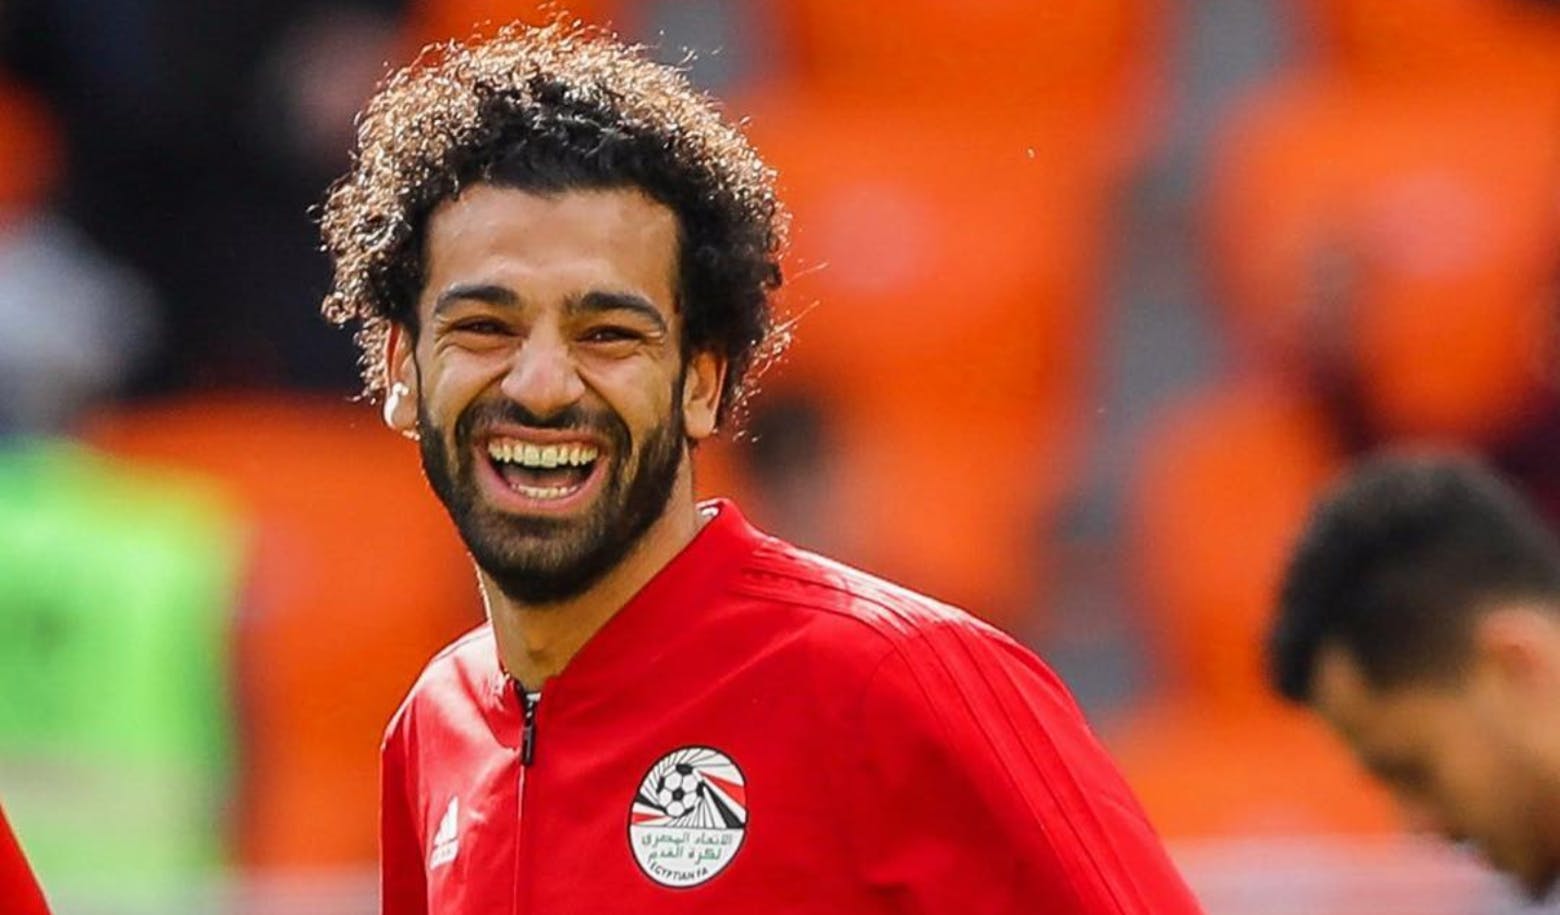 Liverpool and Egypt star Mohamed Salah